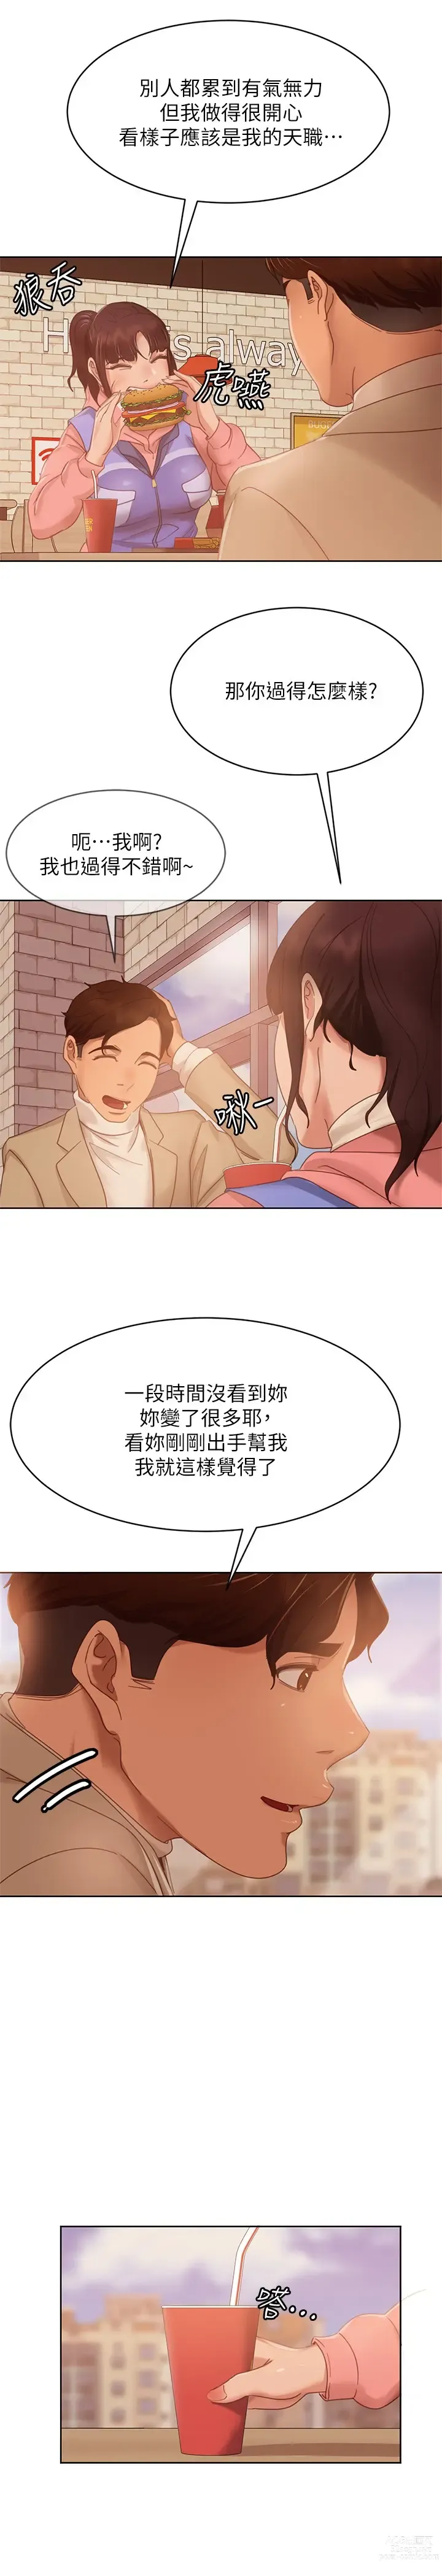 Page 1425 of manga 不良女房客 41-80